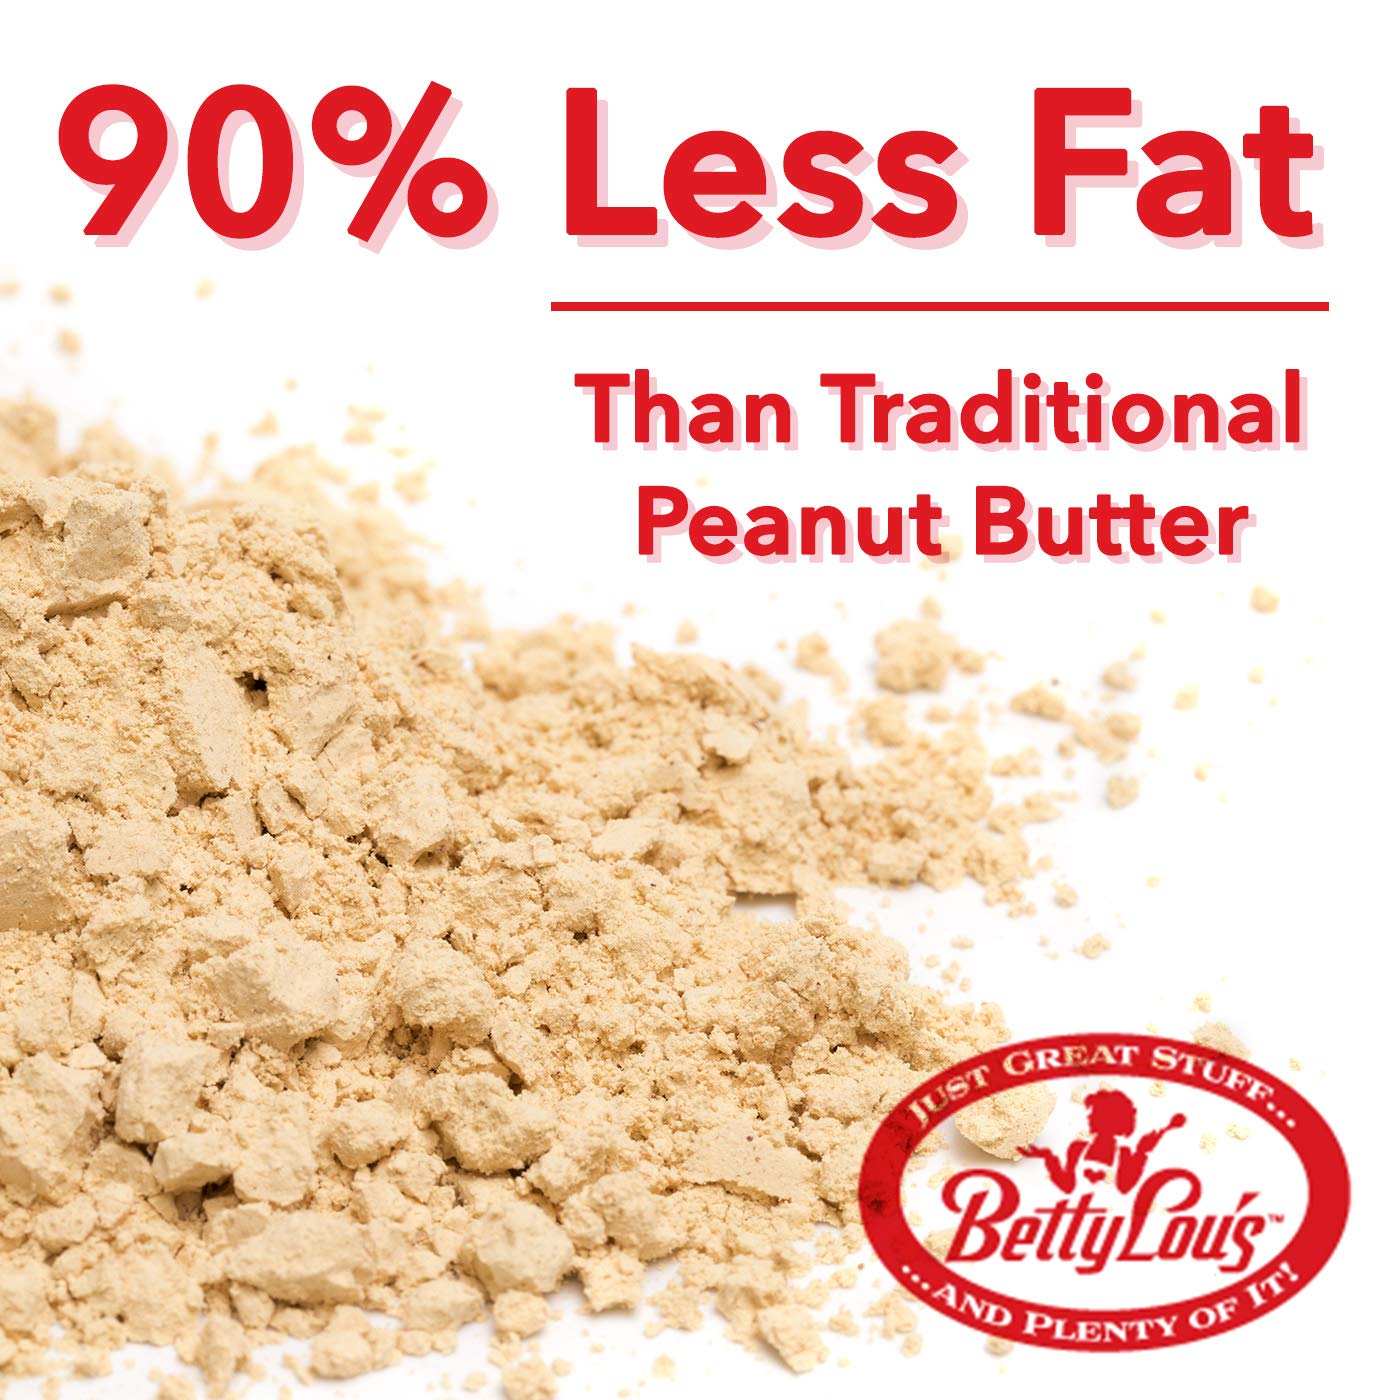 peanut butter powder